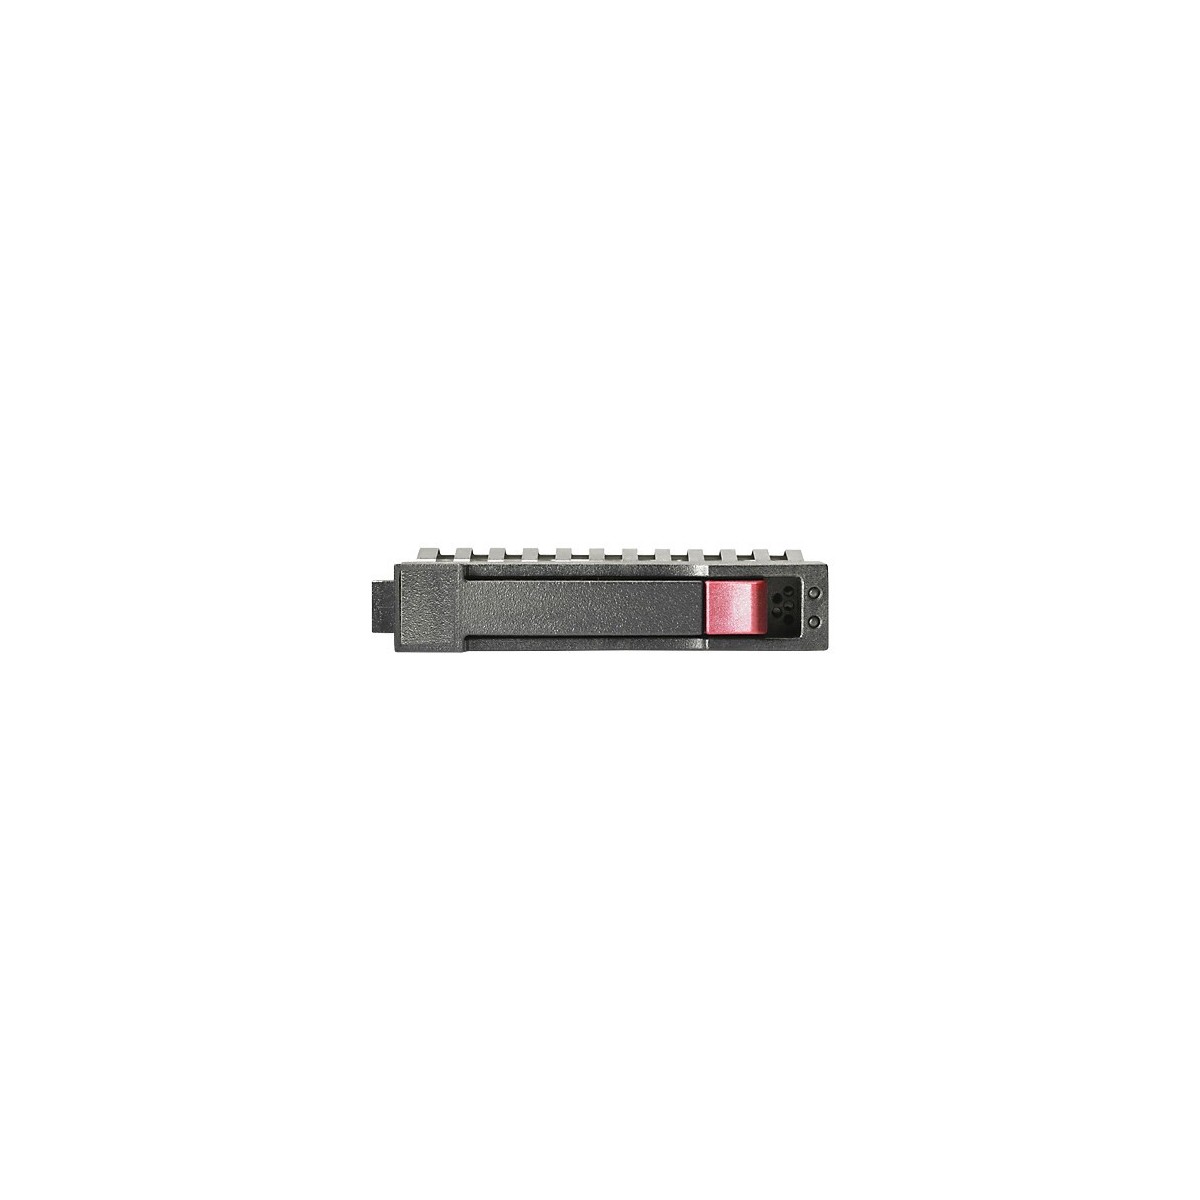 HPE MSA 300GB 12G SAS 15K SFF(2.5in) Dual Port Enterprise 3yr - 2.5 - 300 GB - 15000 RPM